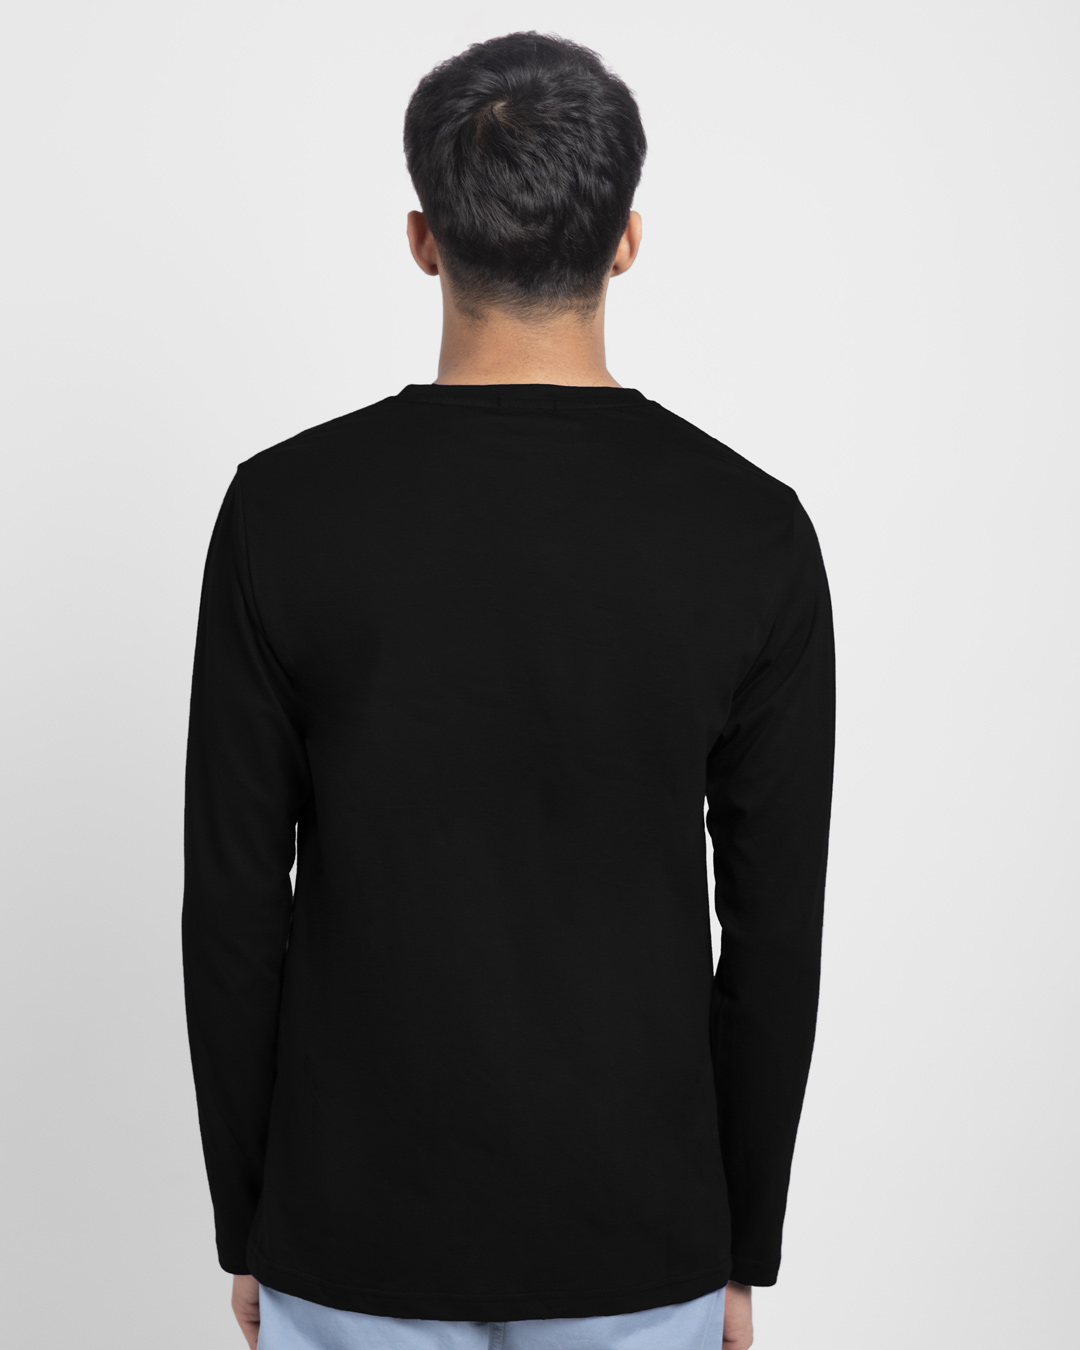 Shop Focus Abstract Full Sleeve T-Shirt Black-Back